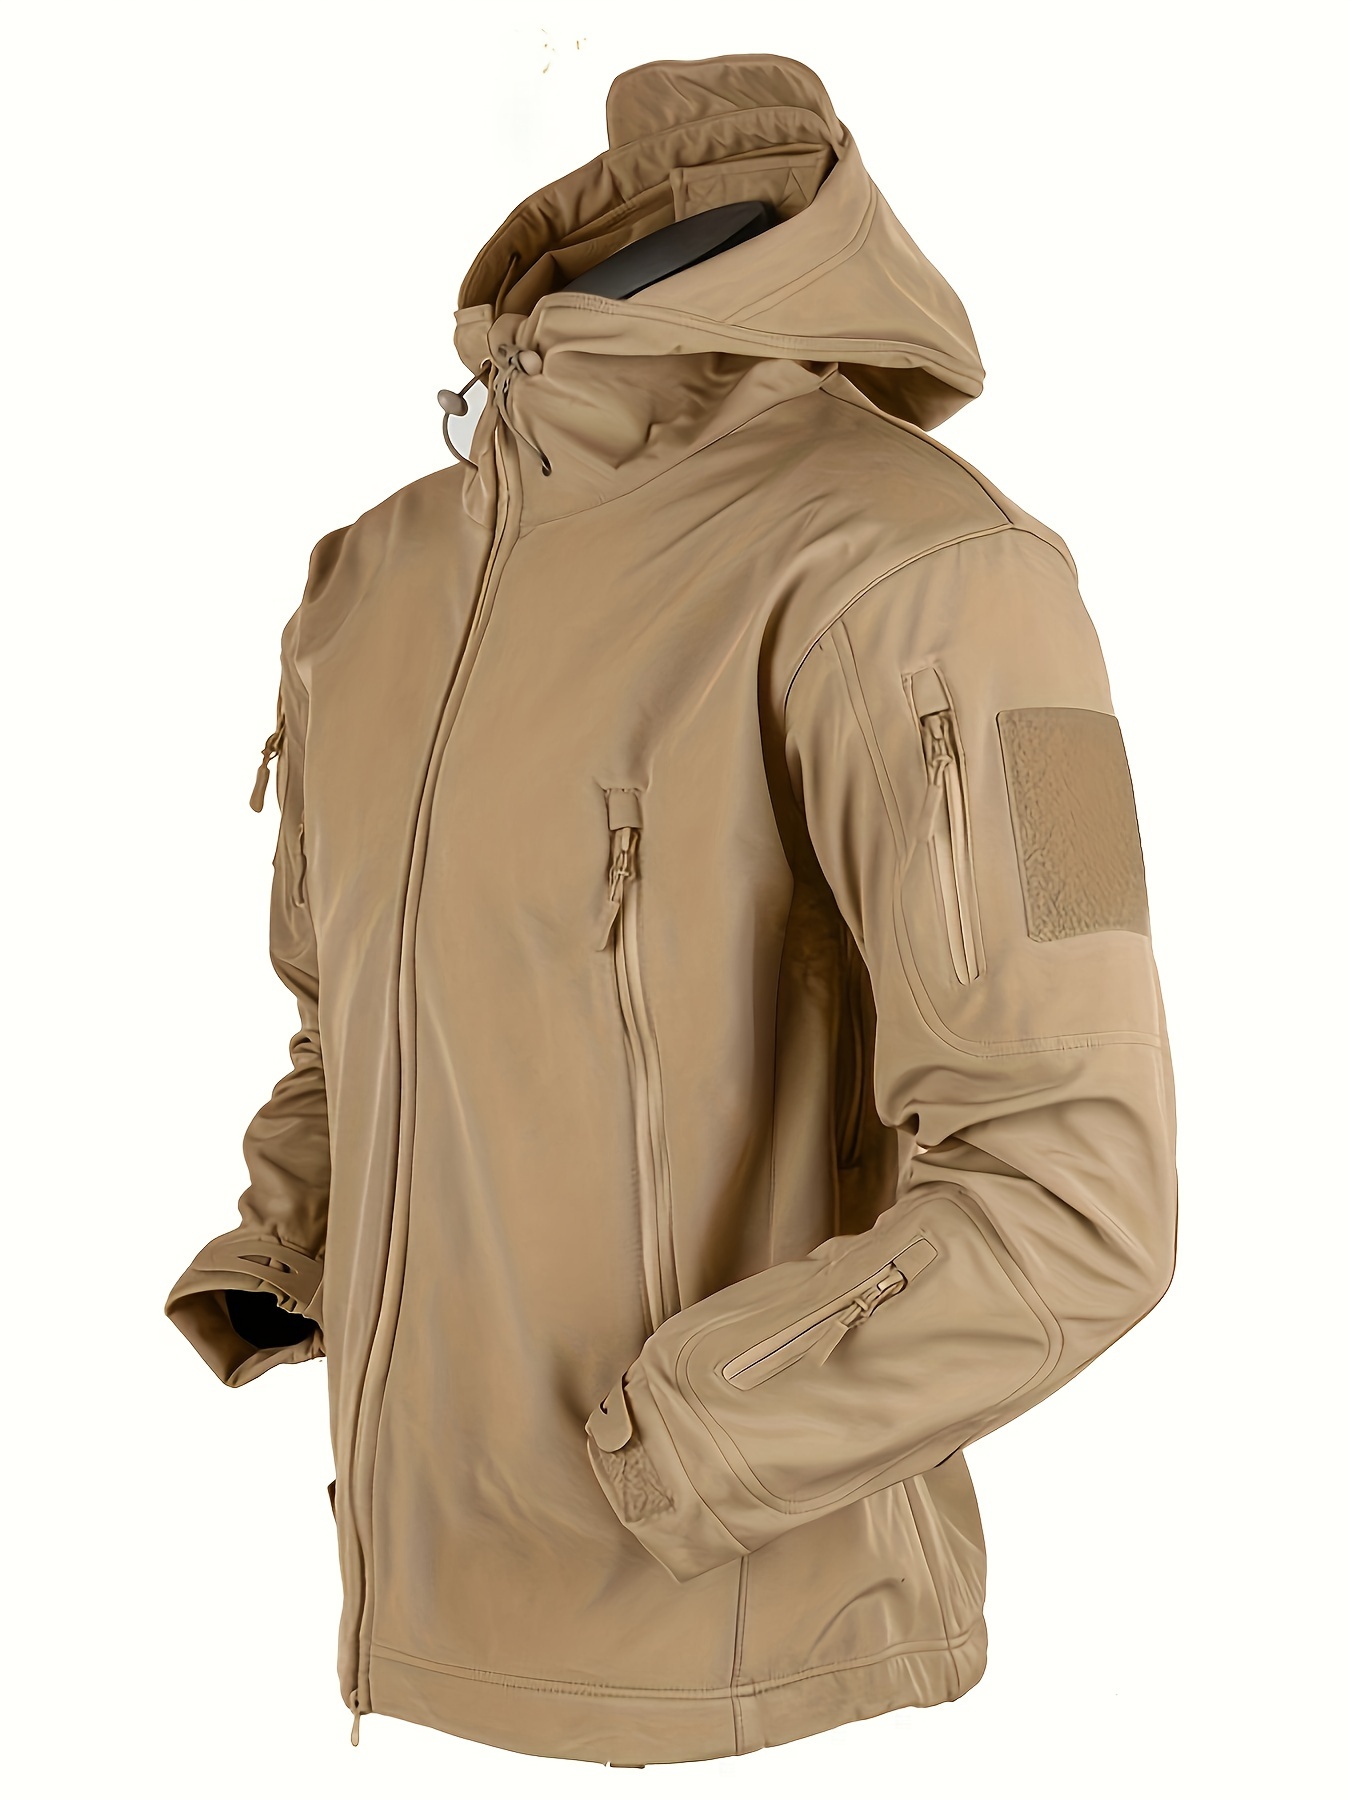 warm fleece hooded windbreaker jacket mens casual zip up jacket coat for fall winter outdoor hiking camping cycling